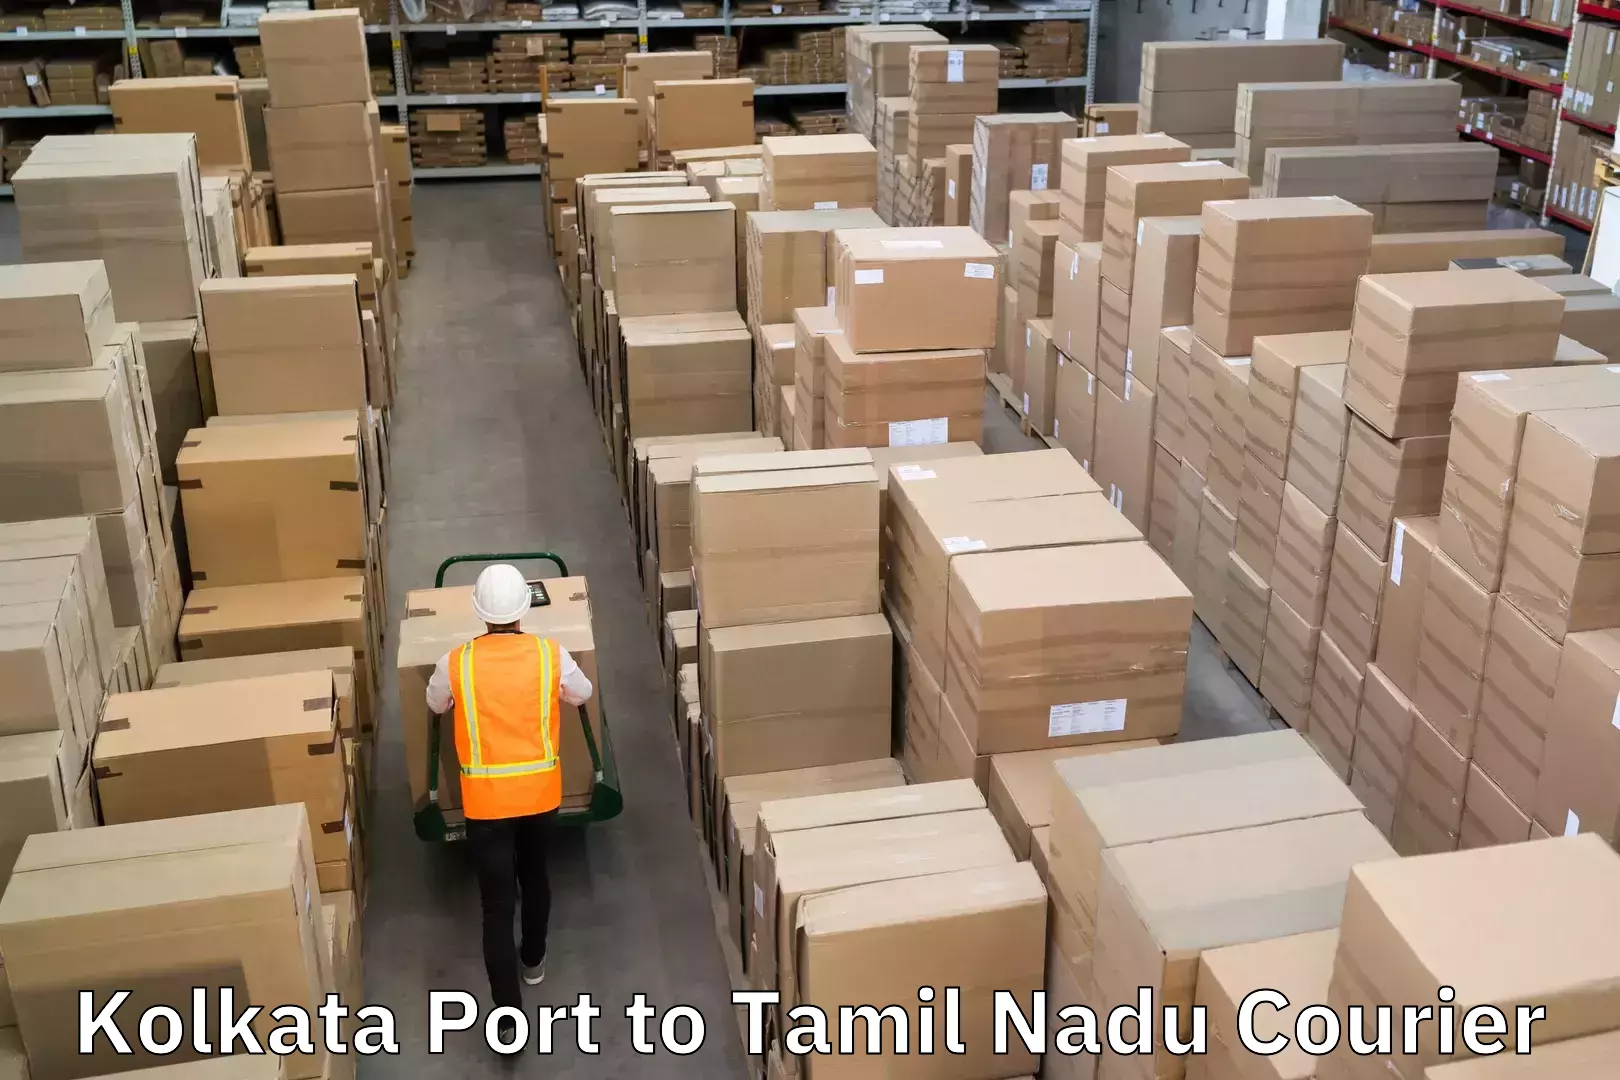 24-hour courier service Kolkata Port to Tamil Nadu